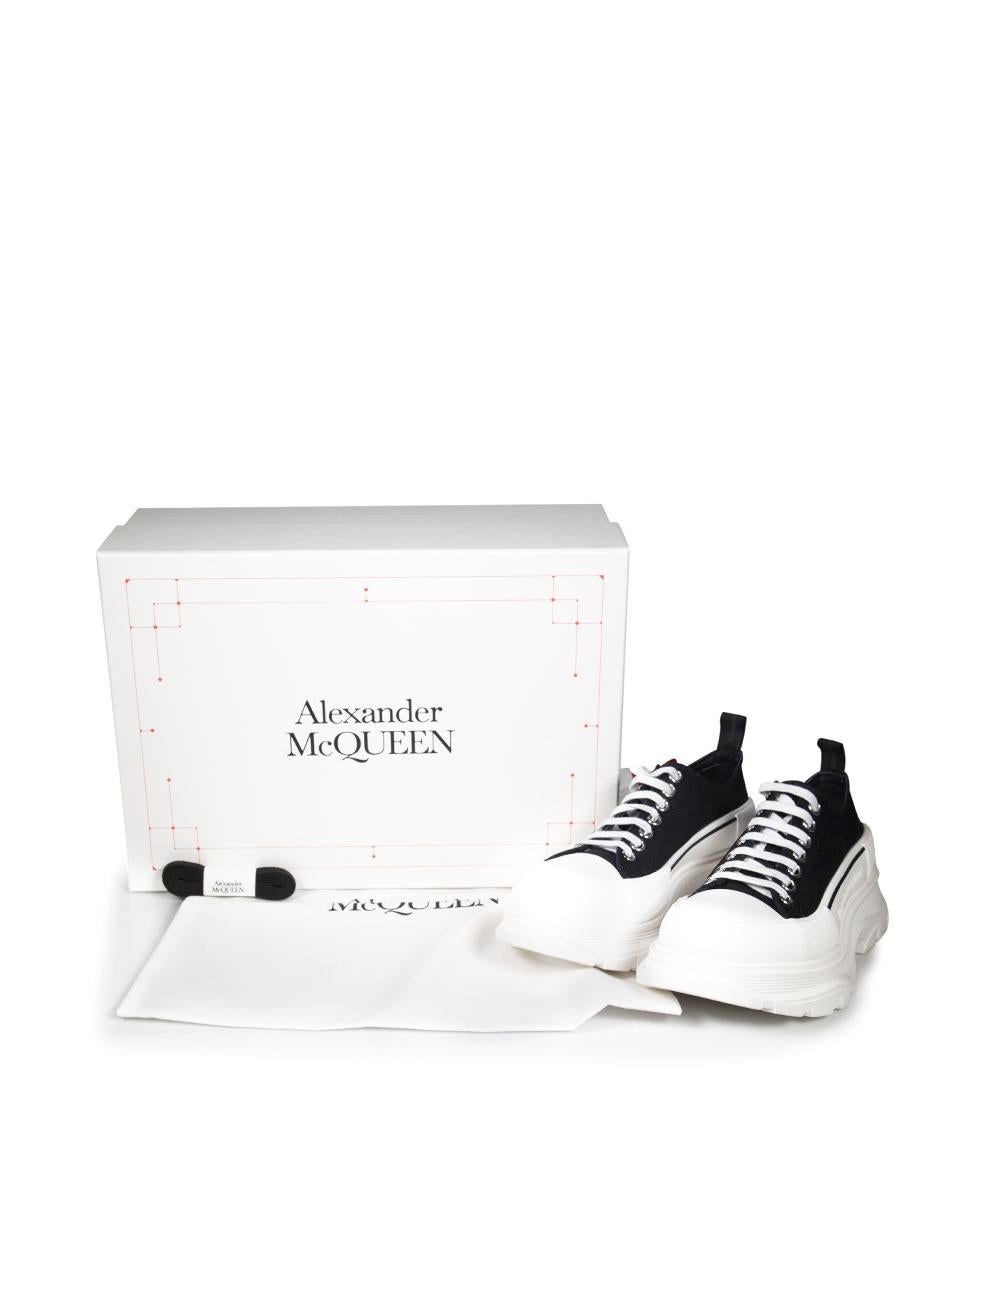 Alexander McQueen Black Tread Slick Trainers Size IT 40 For Sale 3